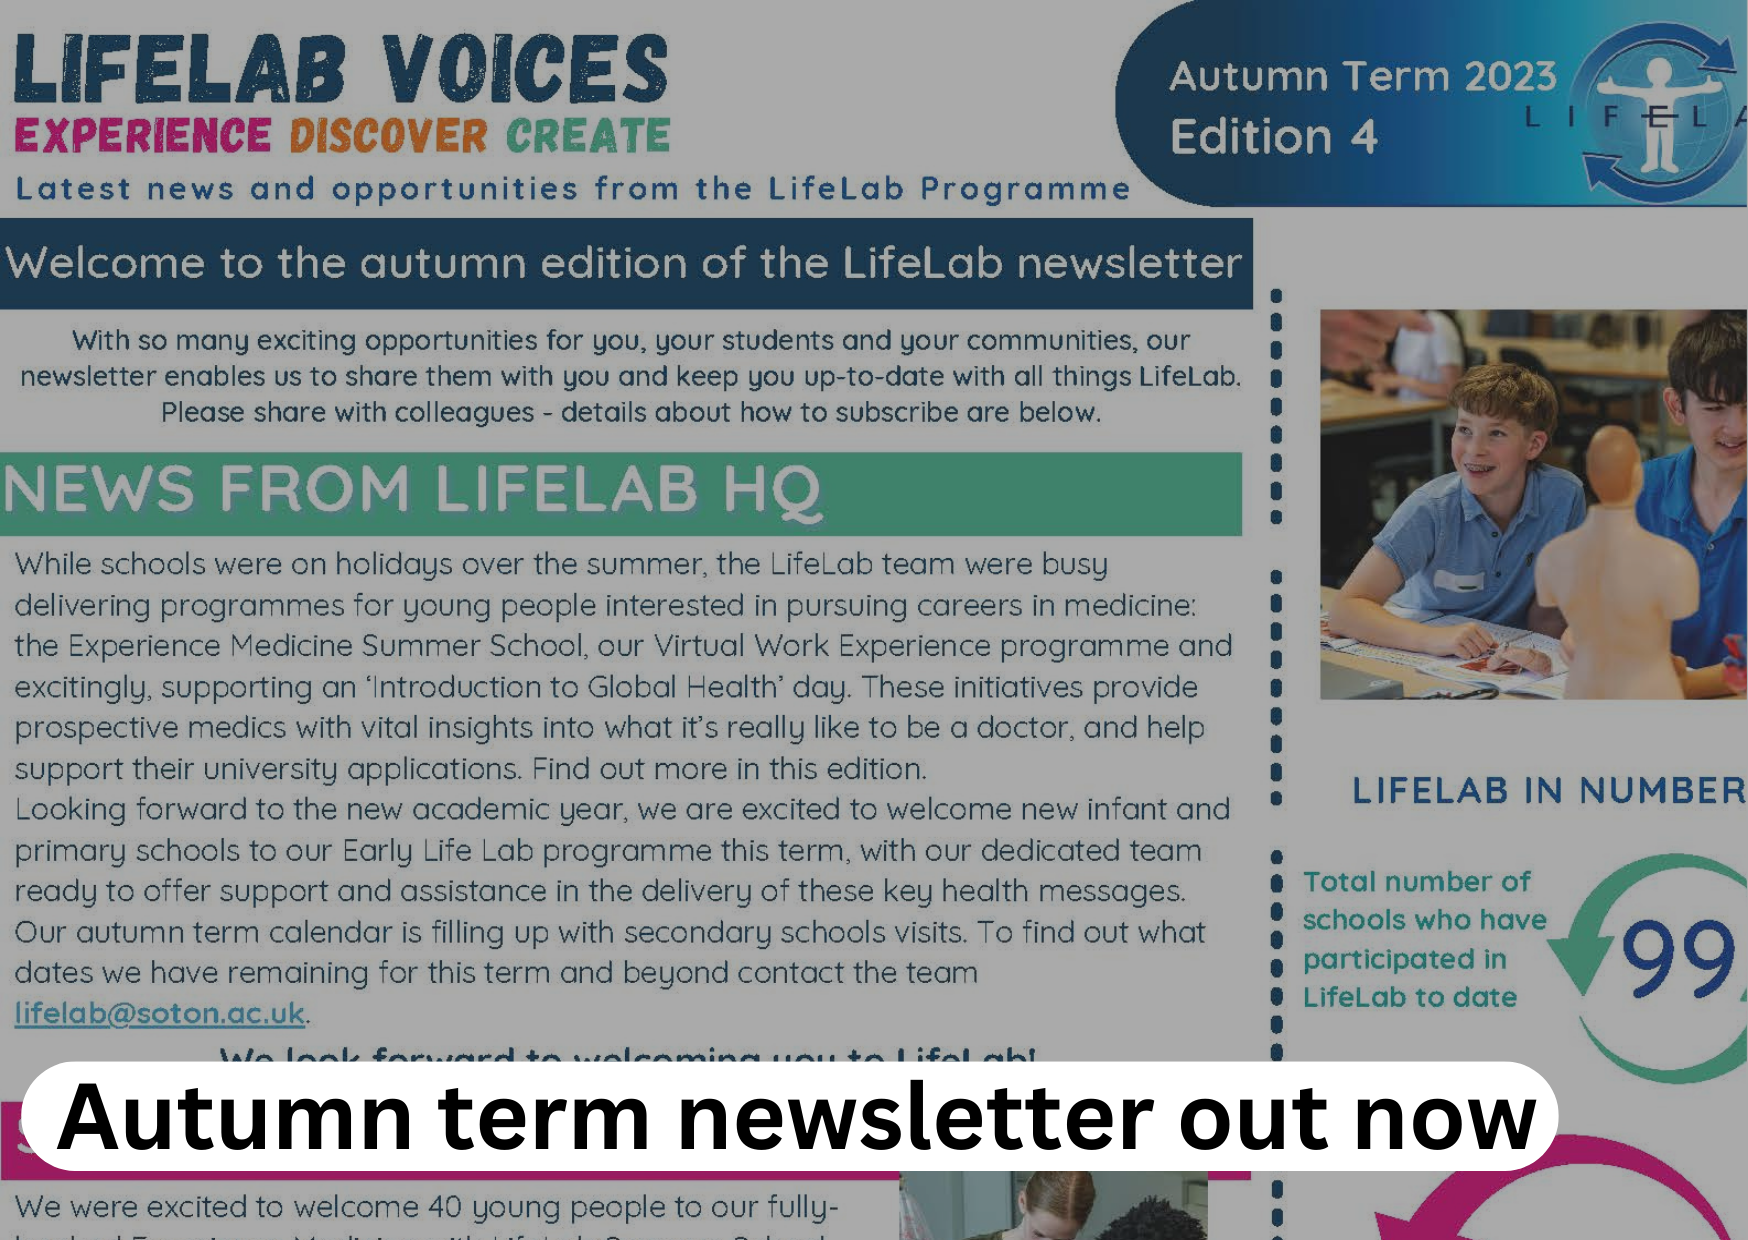 Autumn tern newsletter - link